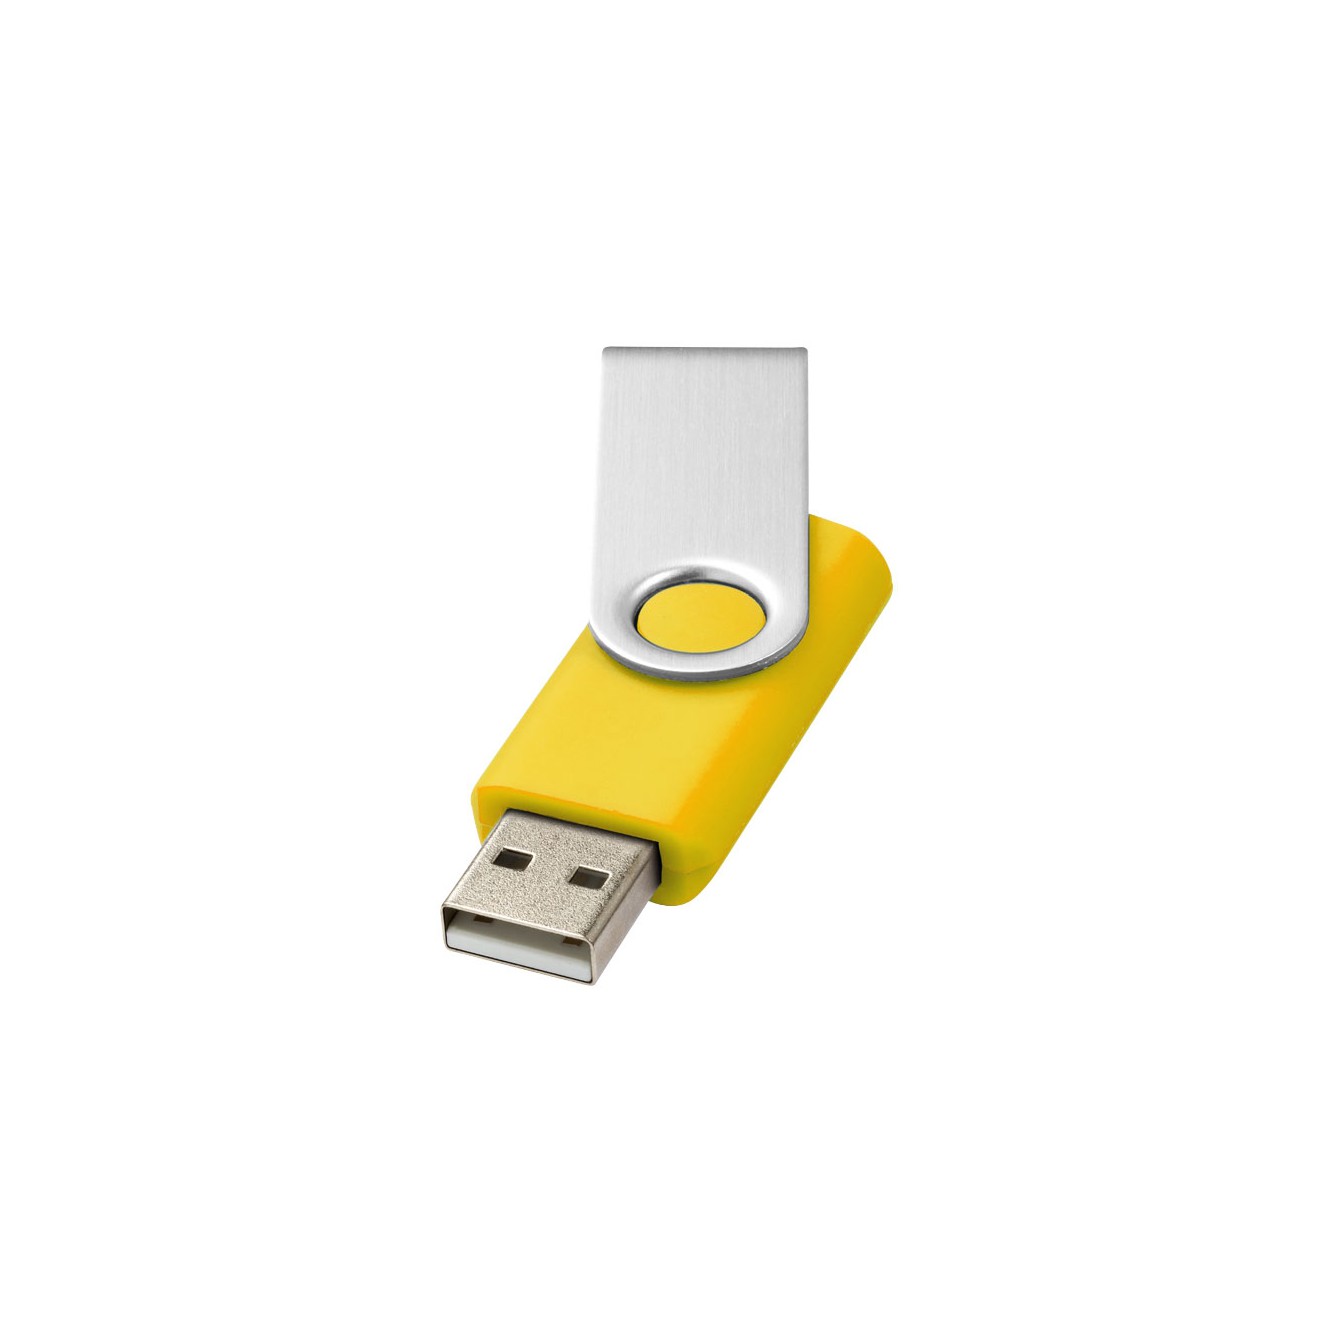 USB stick rotate basic